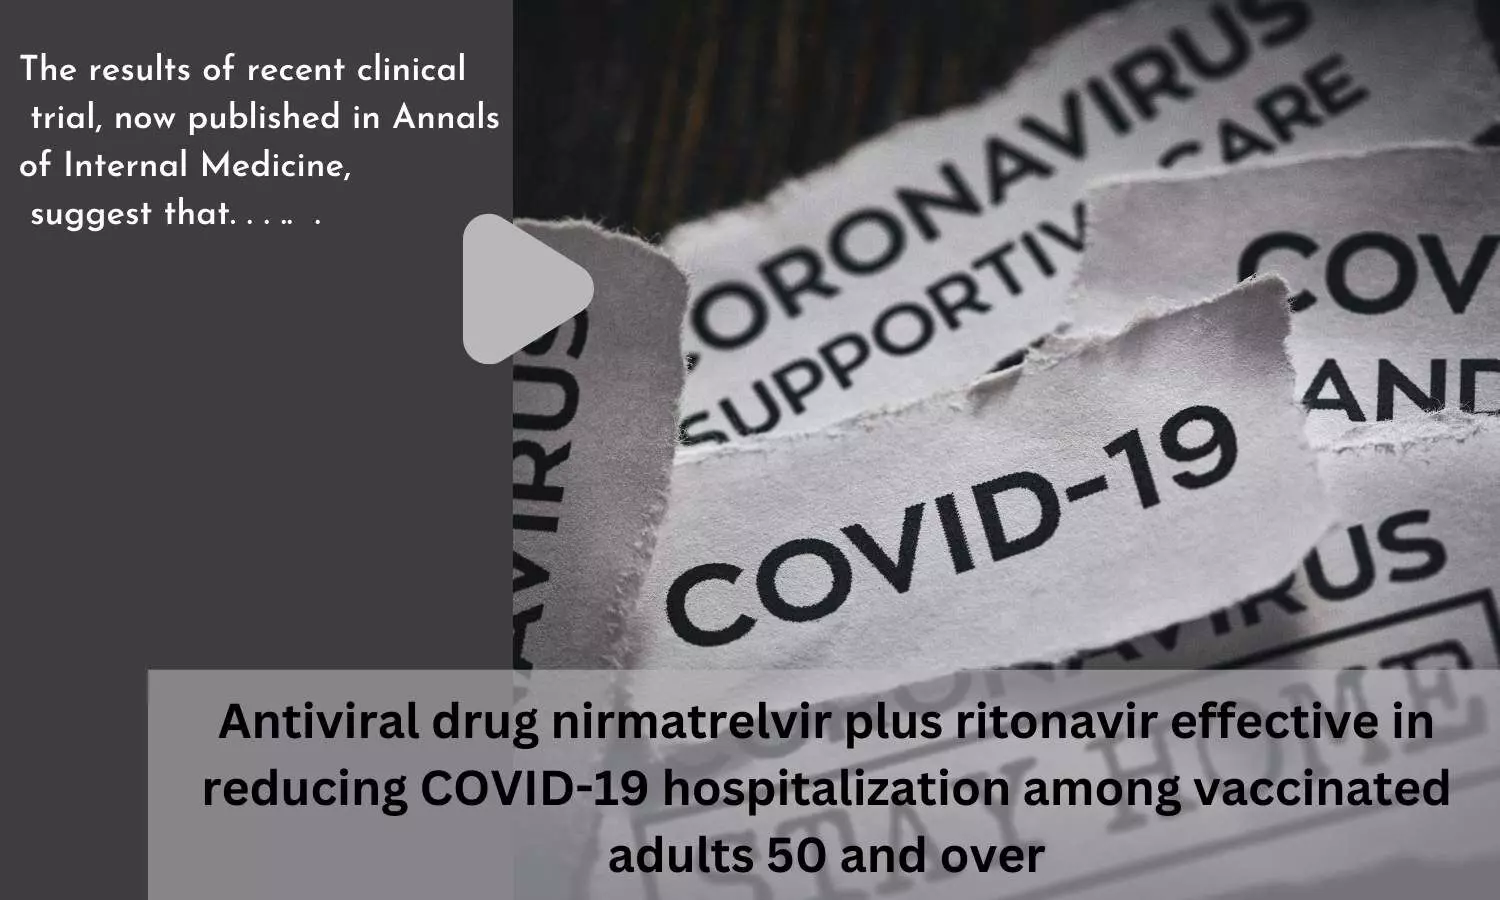 Antiviral drug nirmatrelvir plus ritonavir effective in reducing COVID-19 hospitalization among vaccinated adults 50 and over